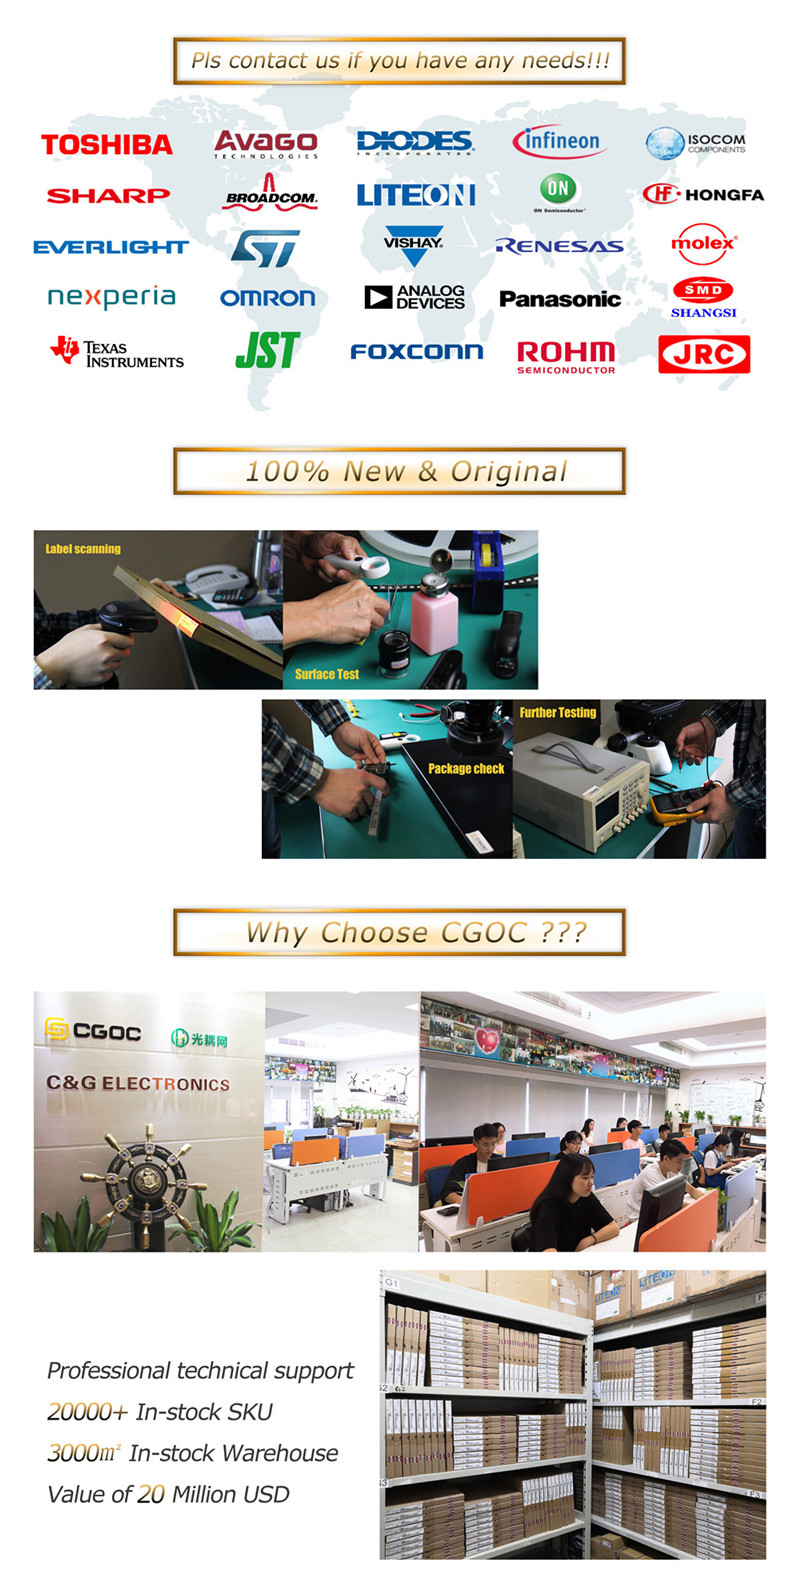 C&G ELECTRONICS PRODUCT_- cgocmall.com.jpg